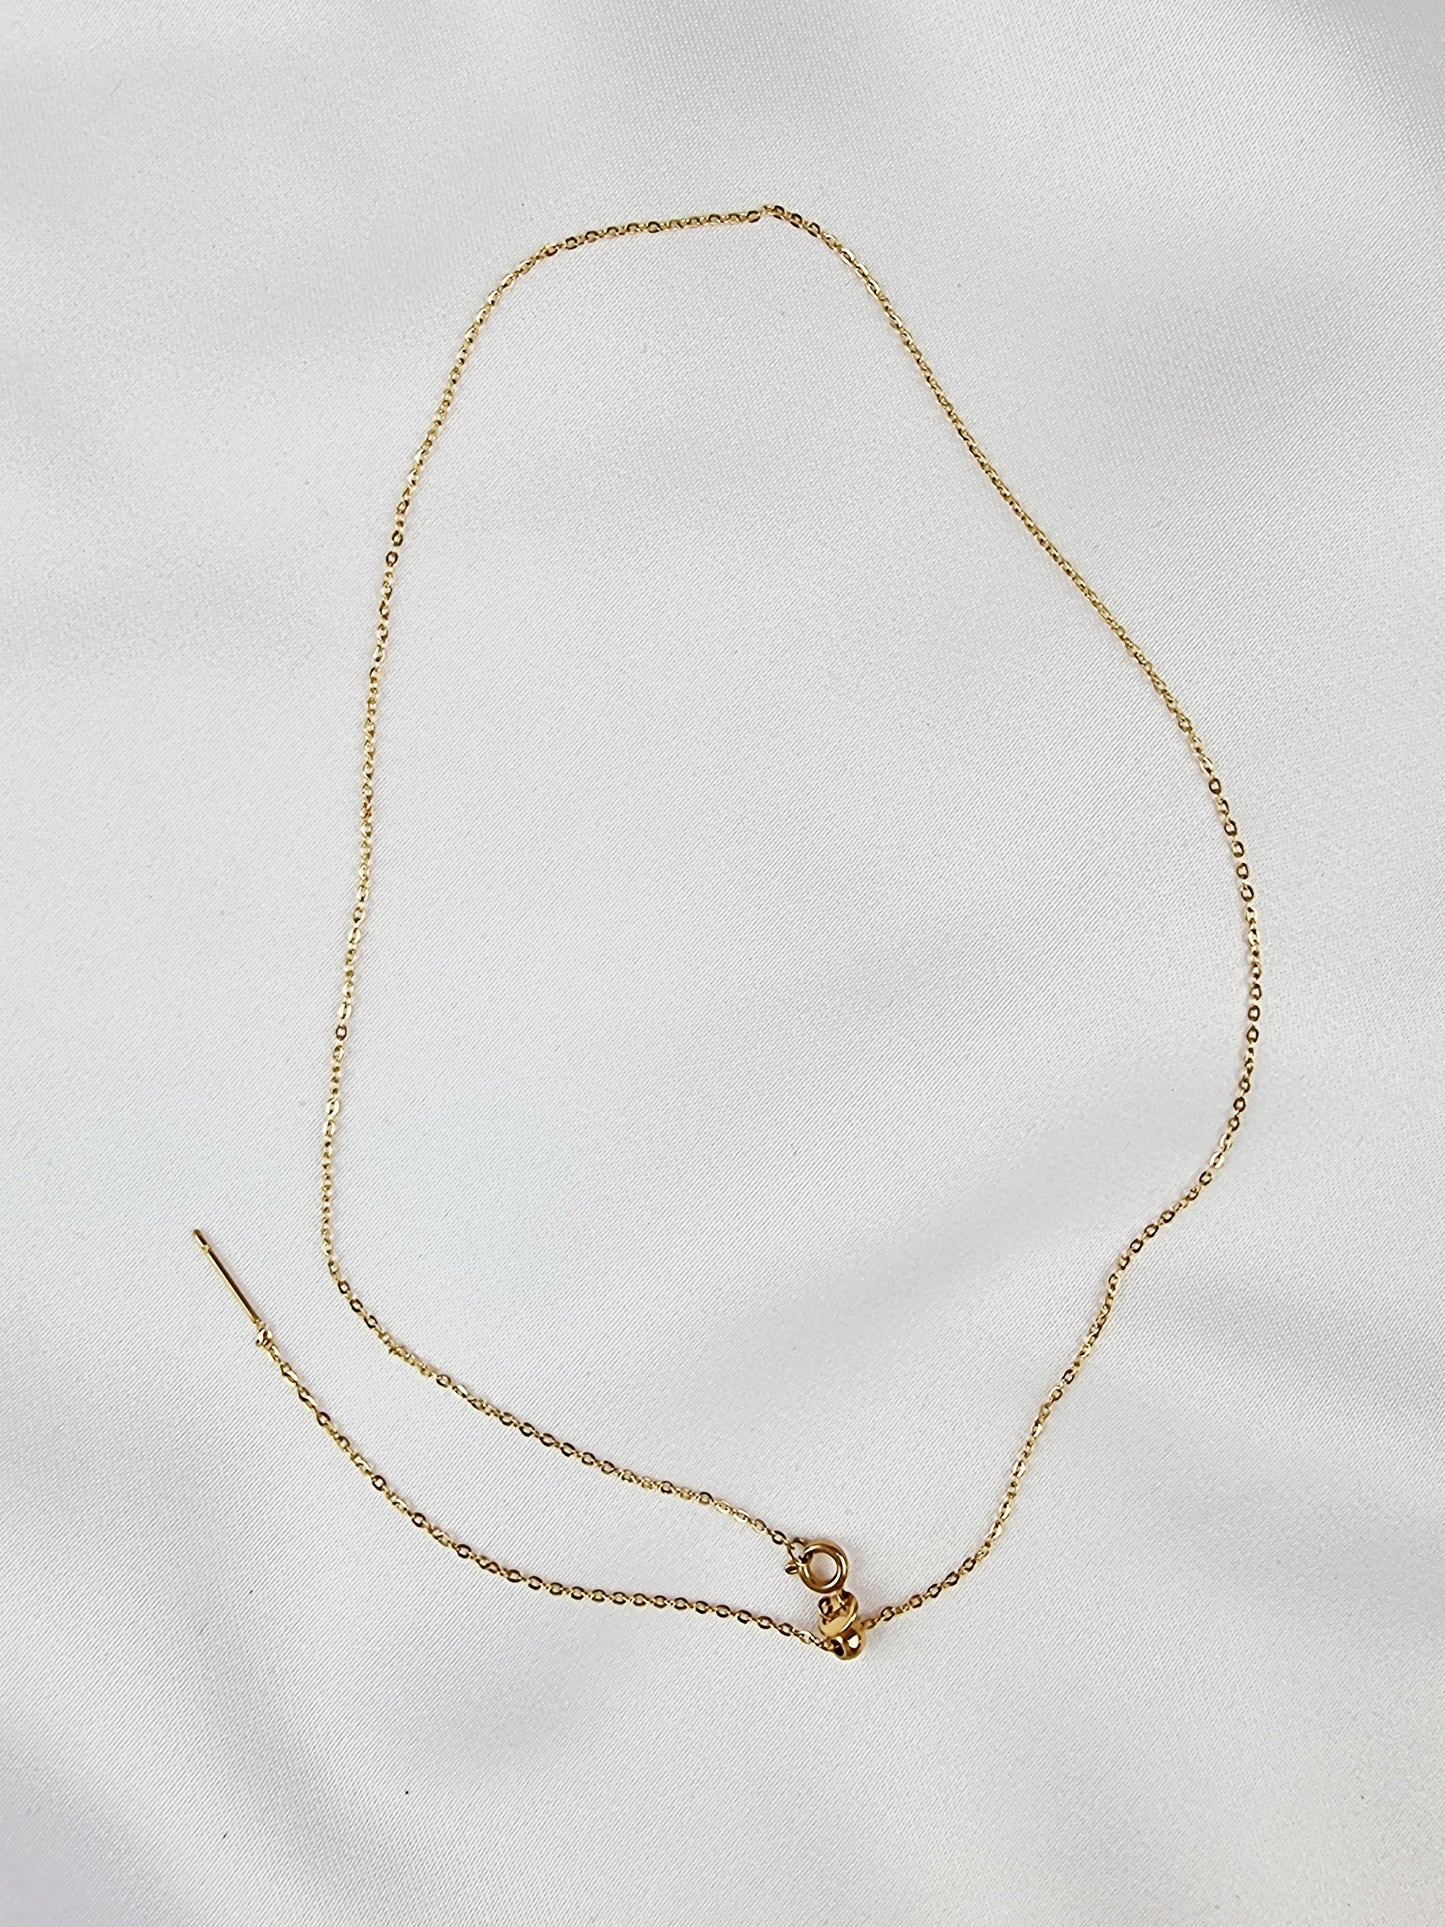 Dainty necklace